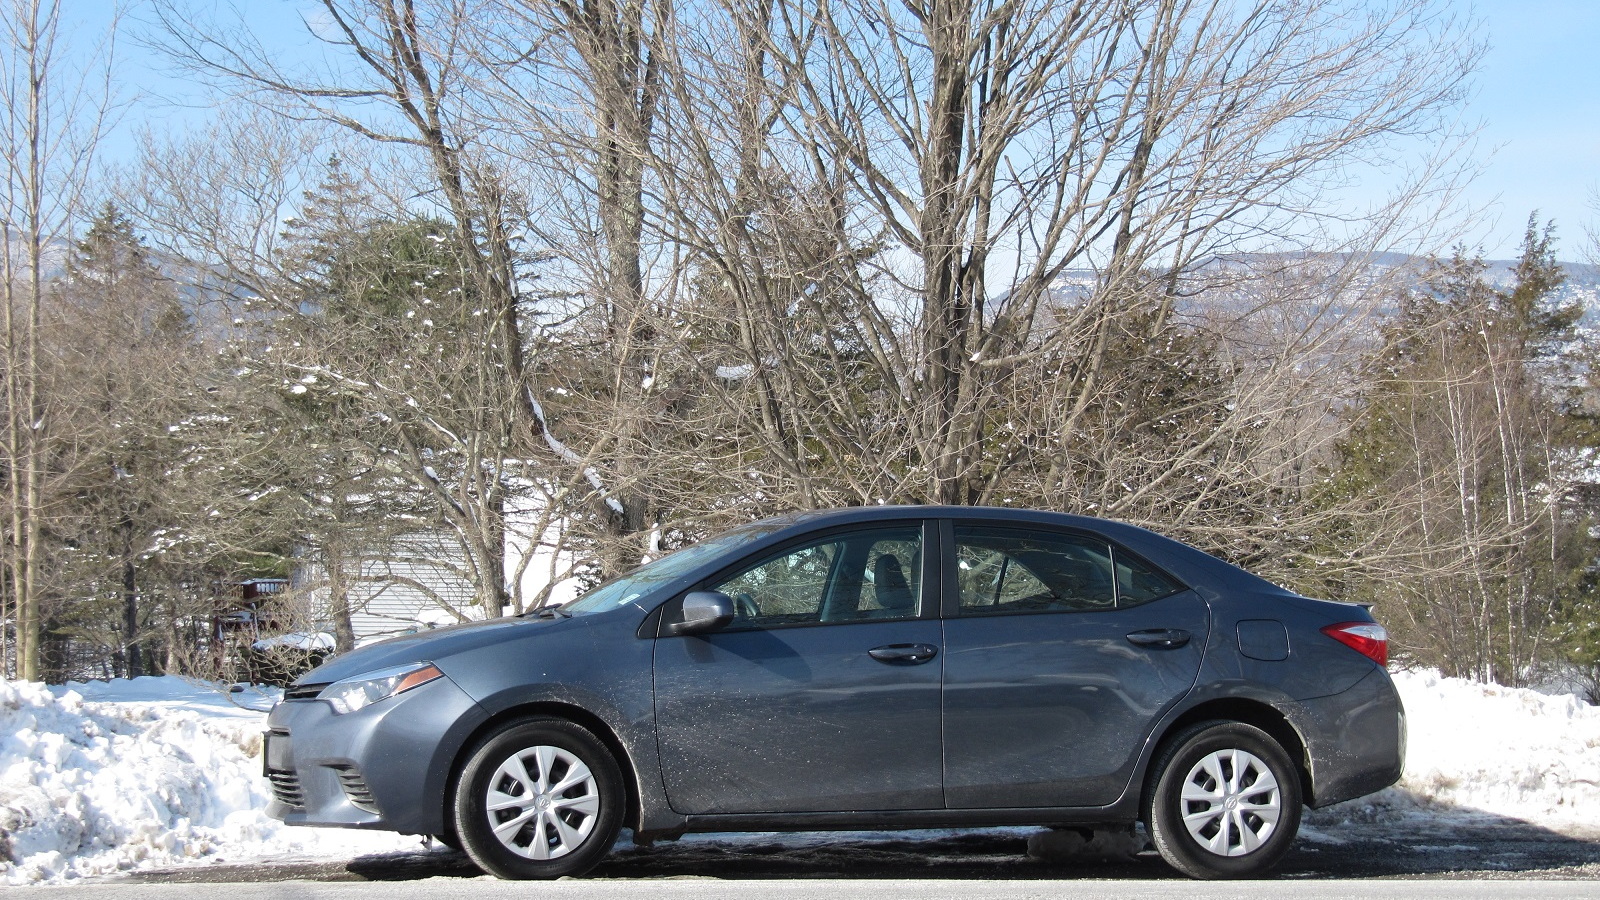 2014 Toyota Corolla LE Eco, Catskill Mountains, NY, Feb 2014